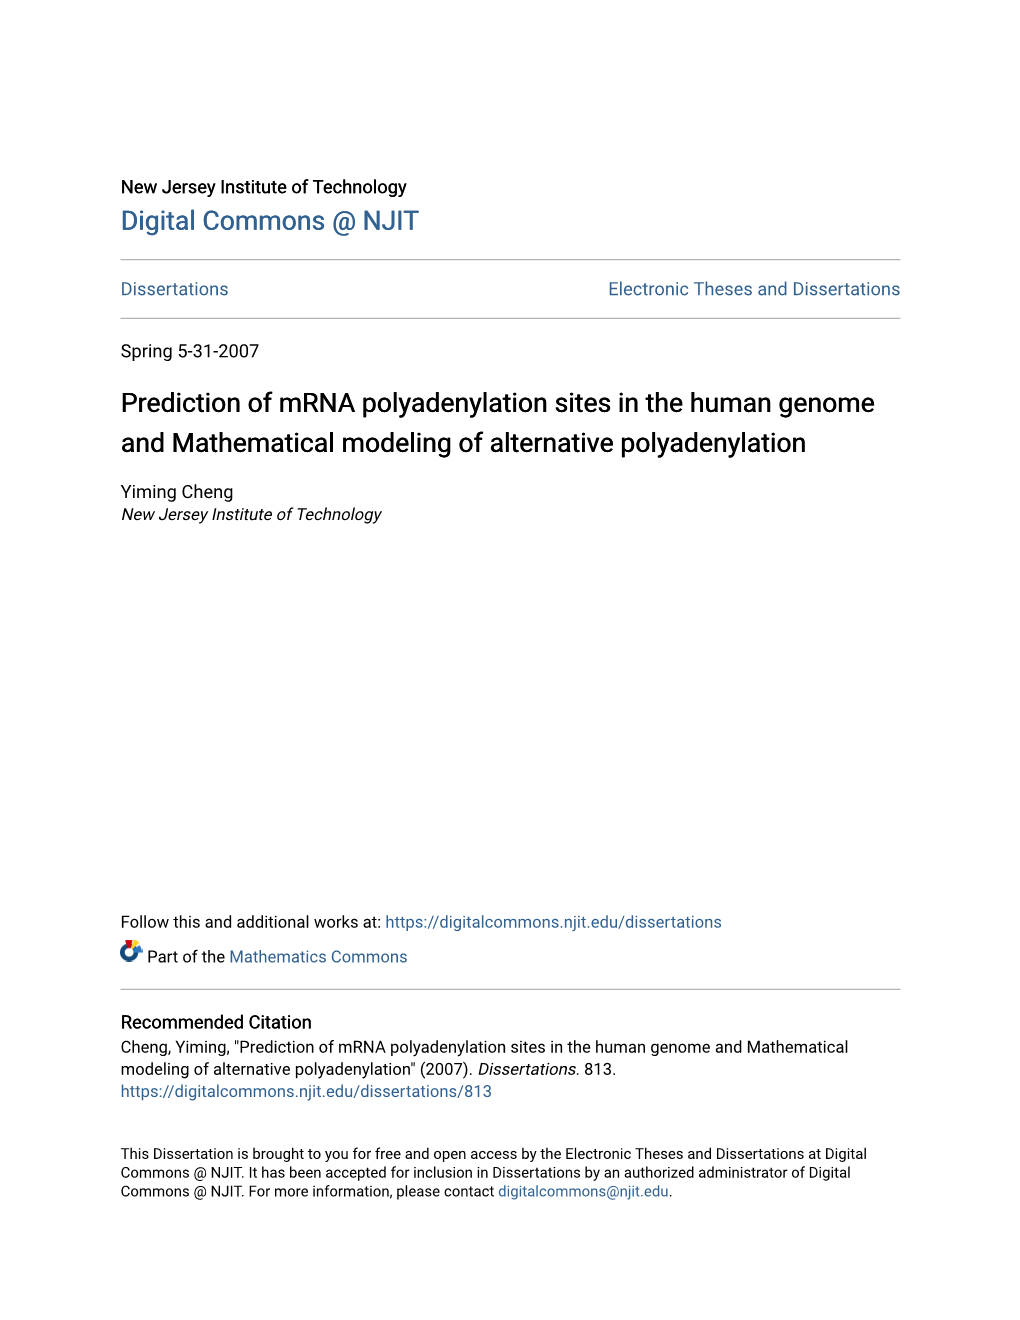 Prediction of Mrna Polyadenylation Sites in the Human Genome and Mathematical Modeling of Alternative Polyadenylation